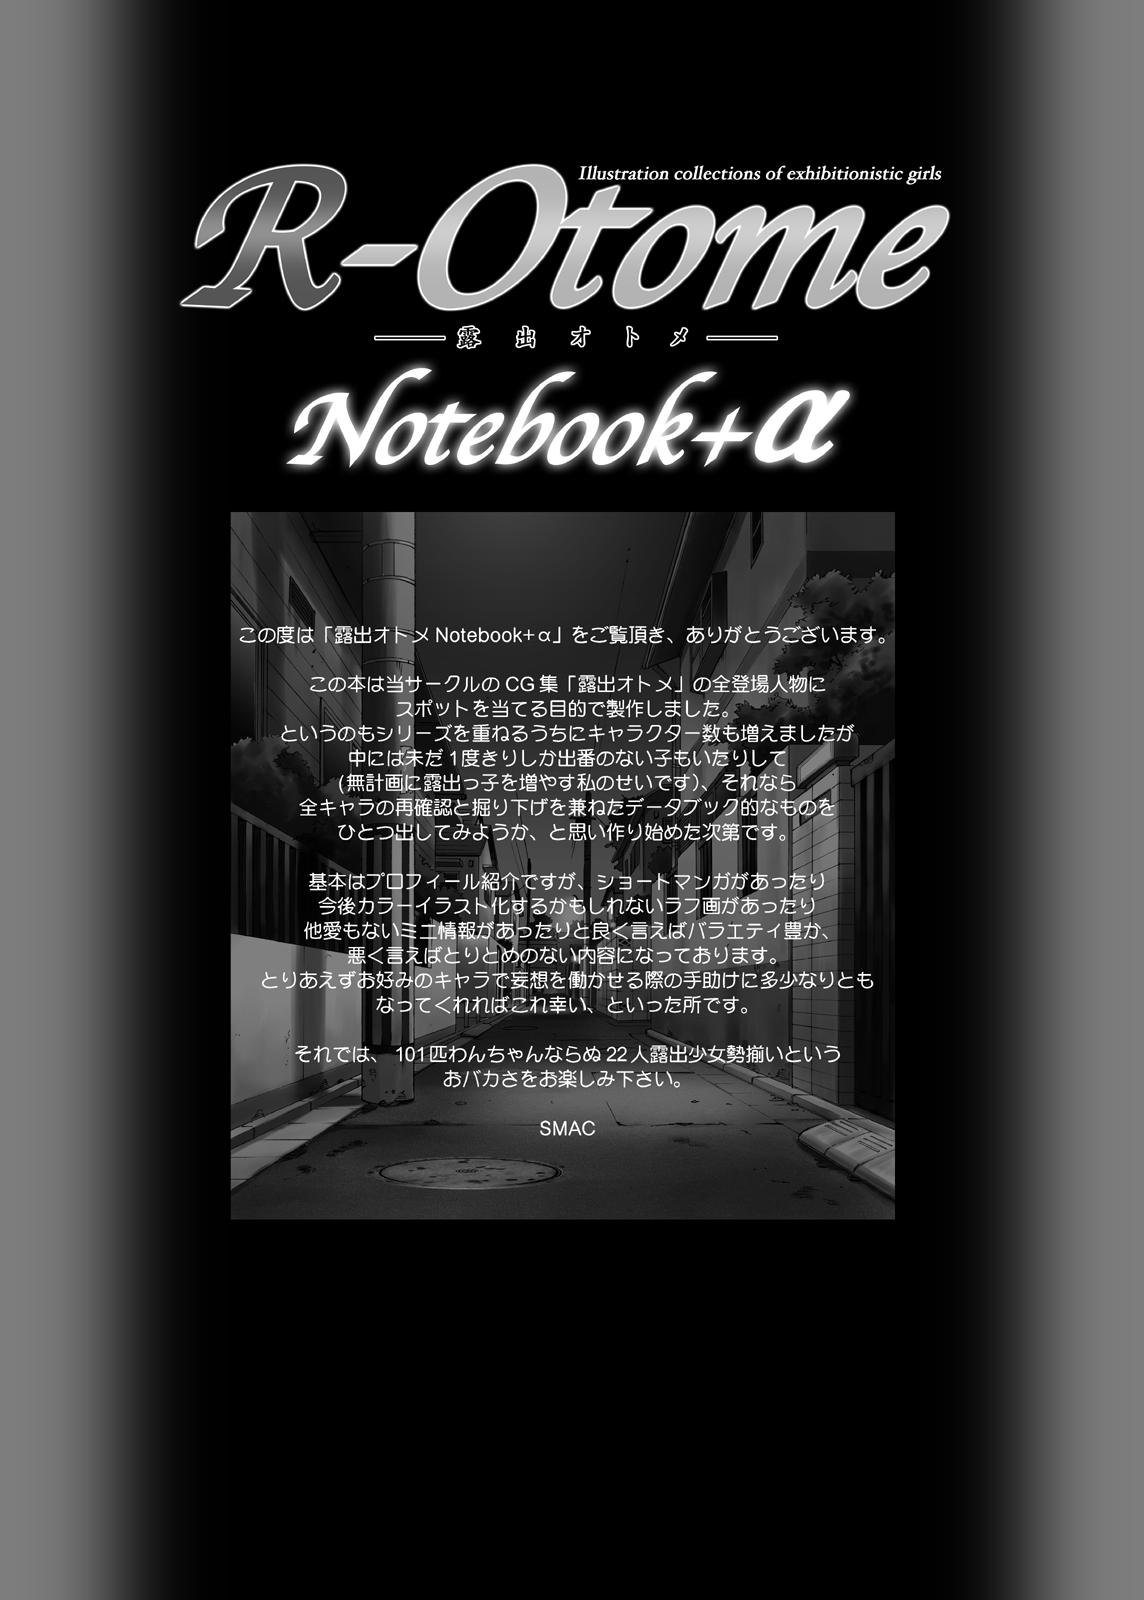 Roshutsu Otome Notebook+α 15